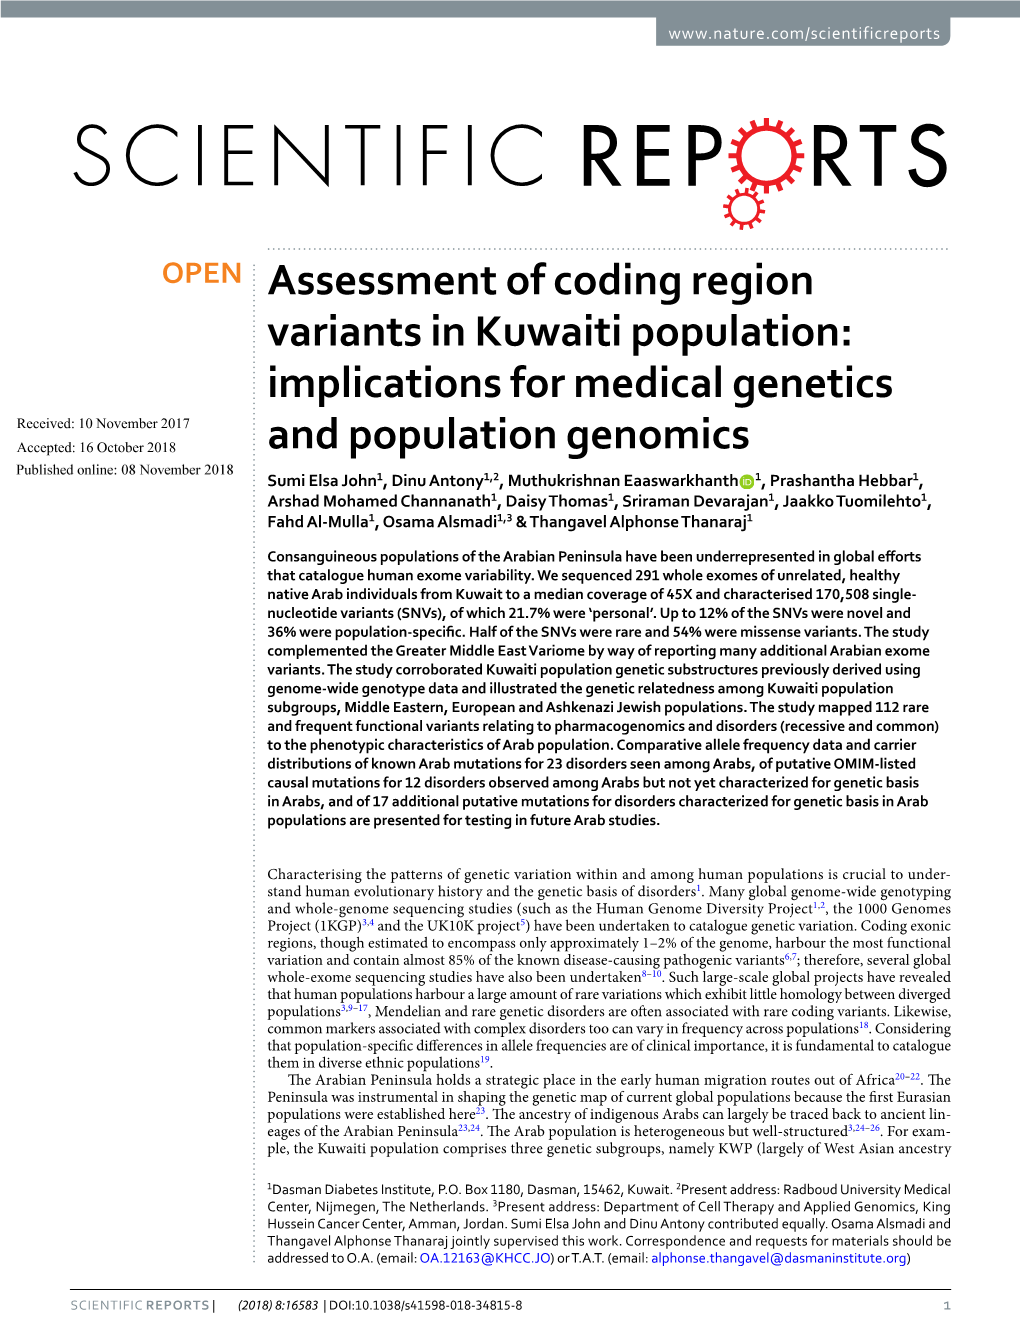 Assessment of Coding Region Variants in Kuwaiti Population: Implications